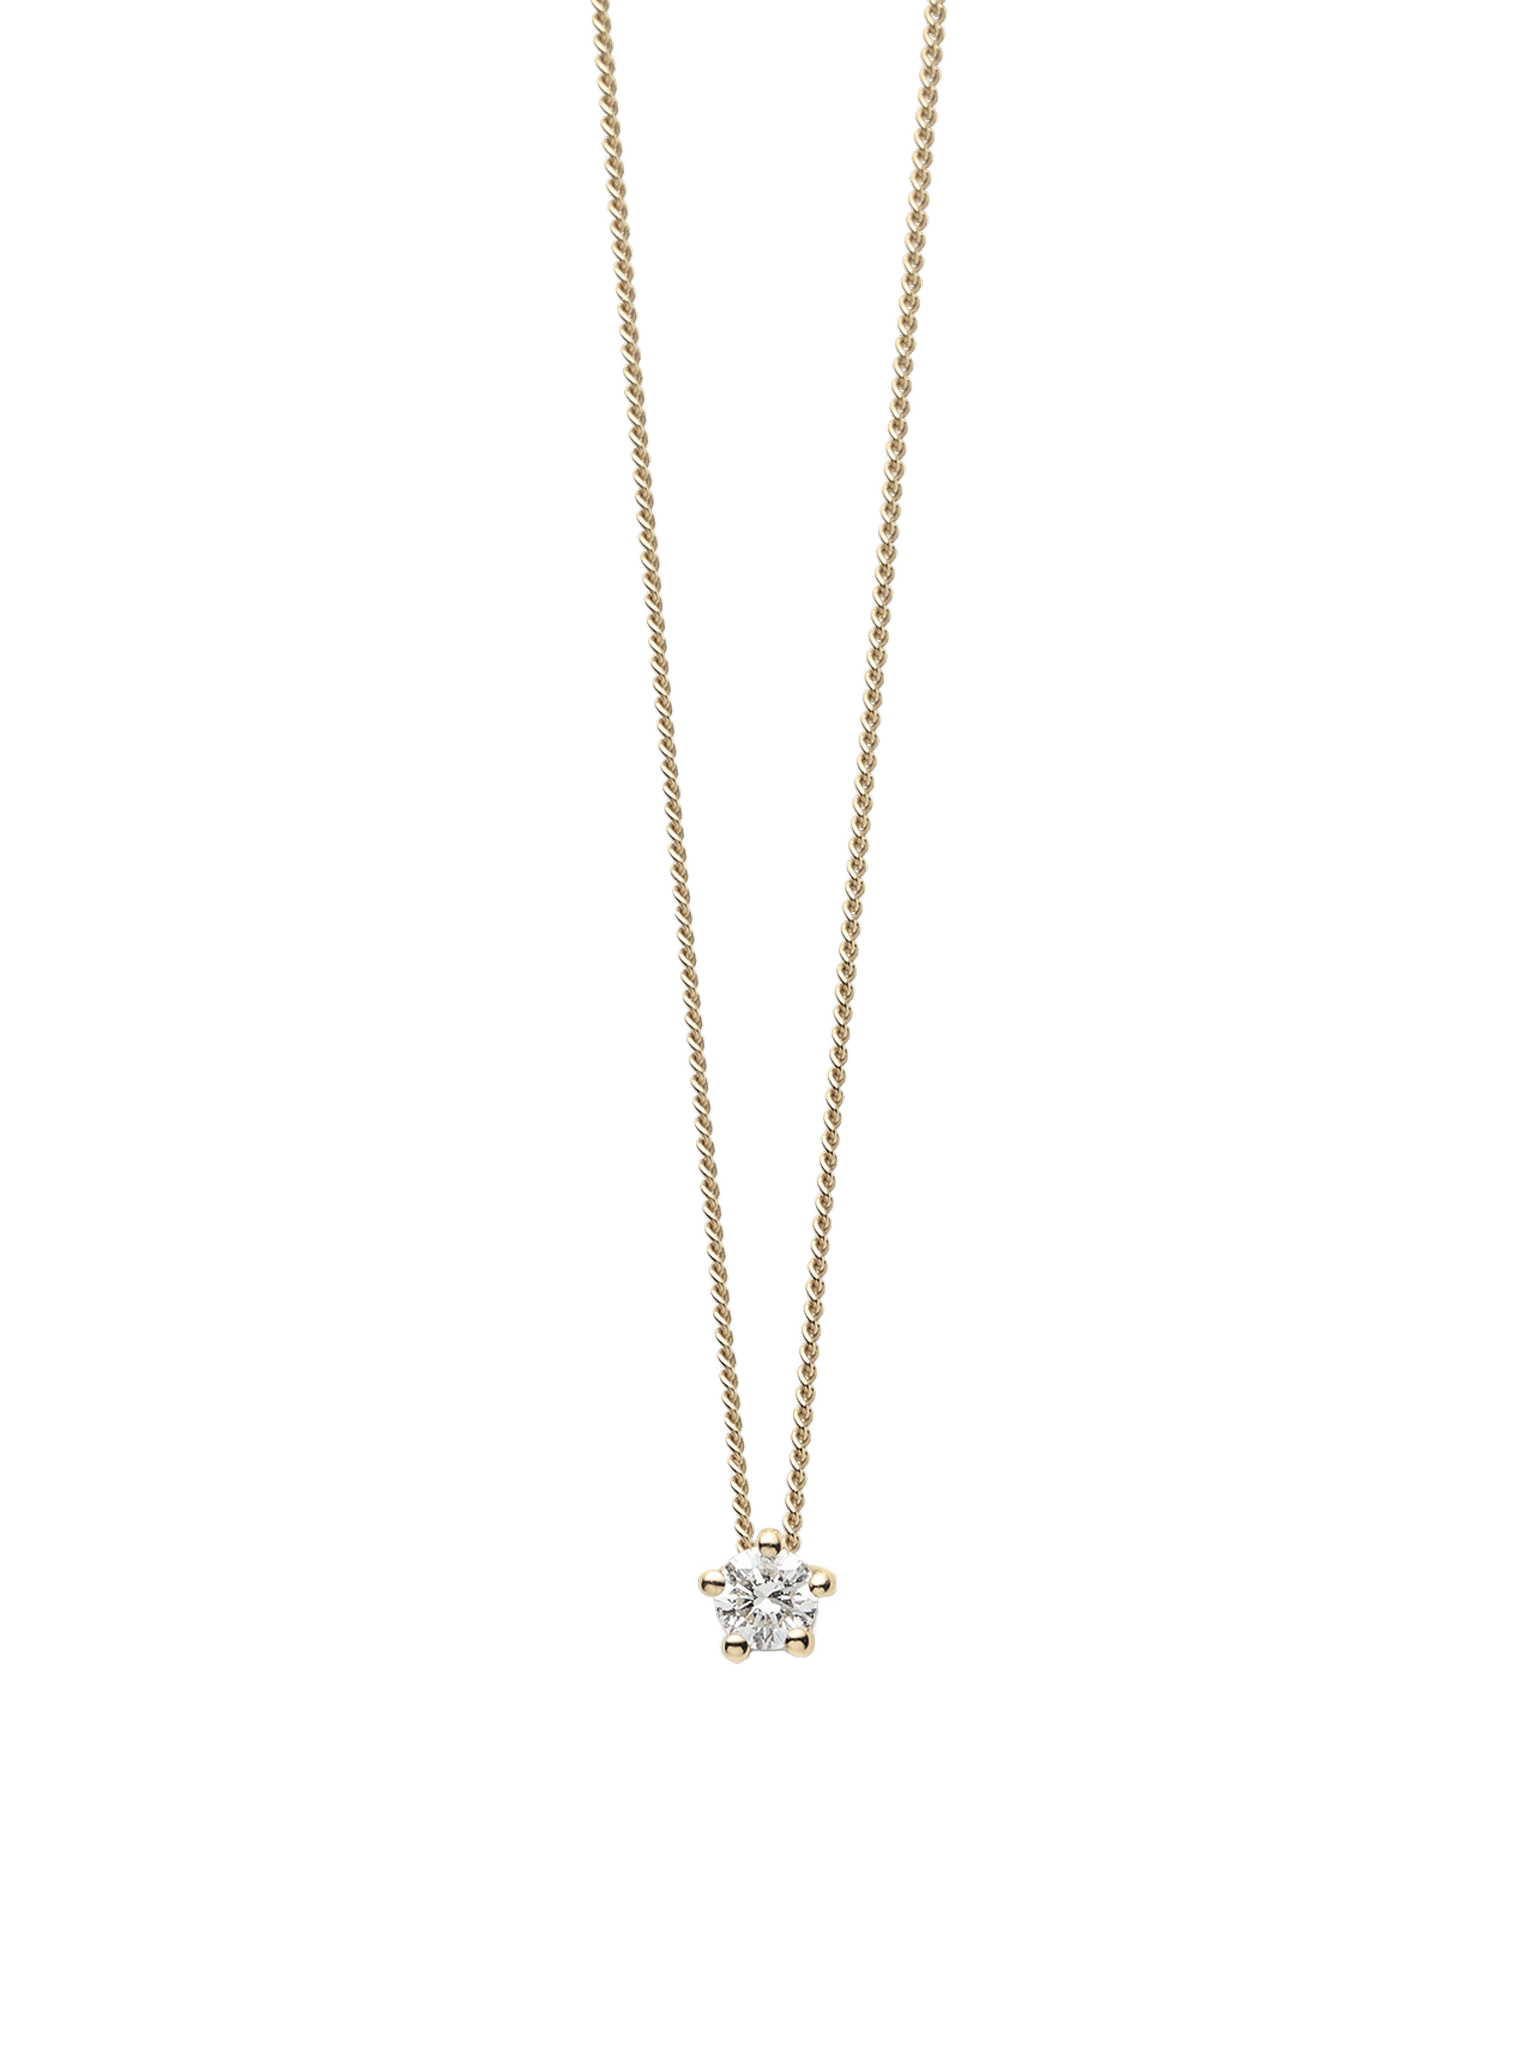 Nole diamond chain necklace